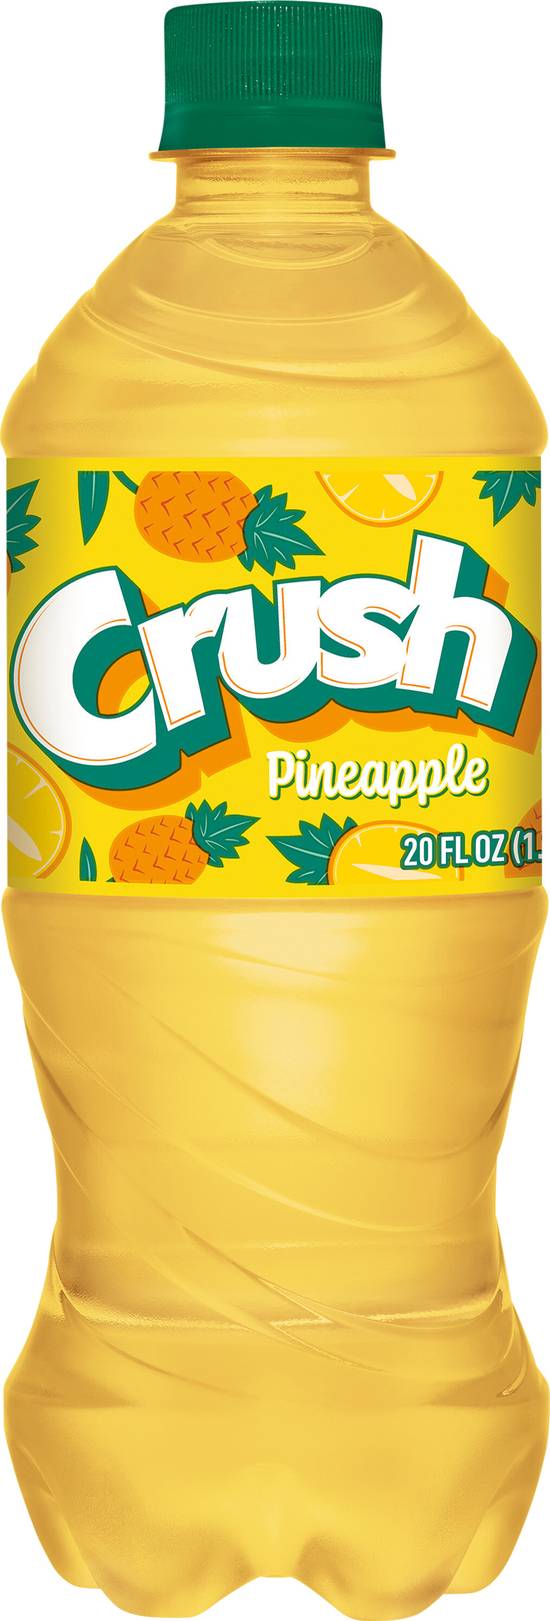 Crush Soda (20 fl oz) (pineapple)